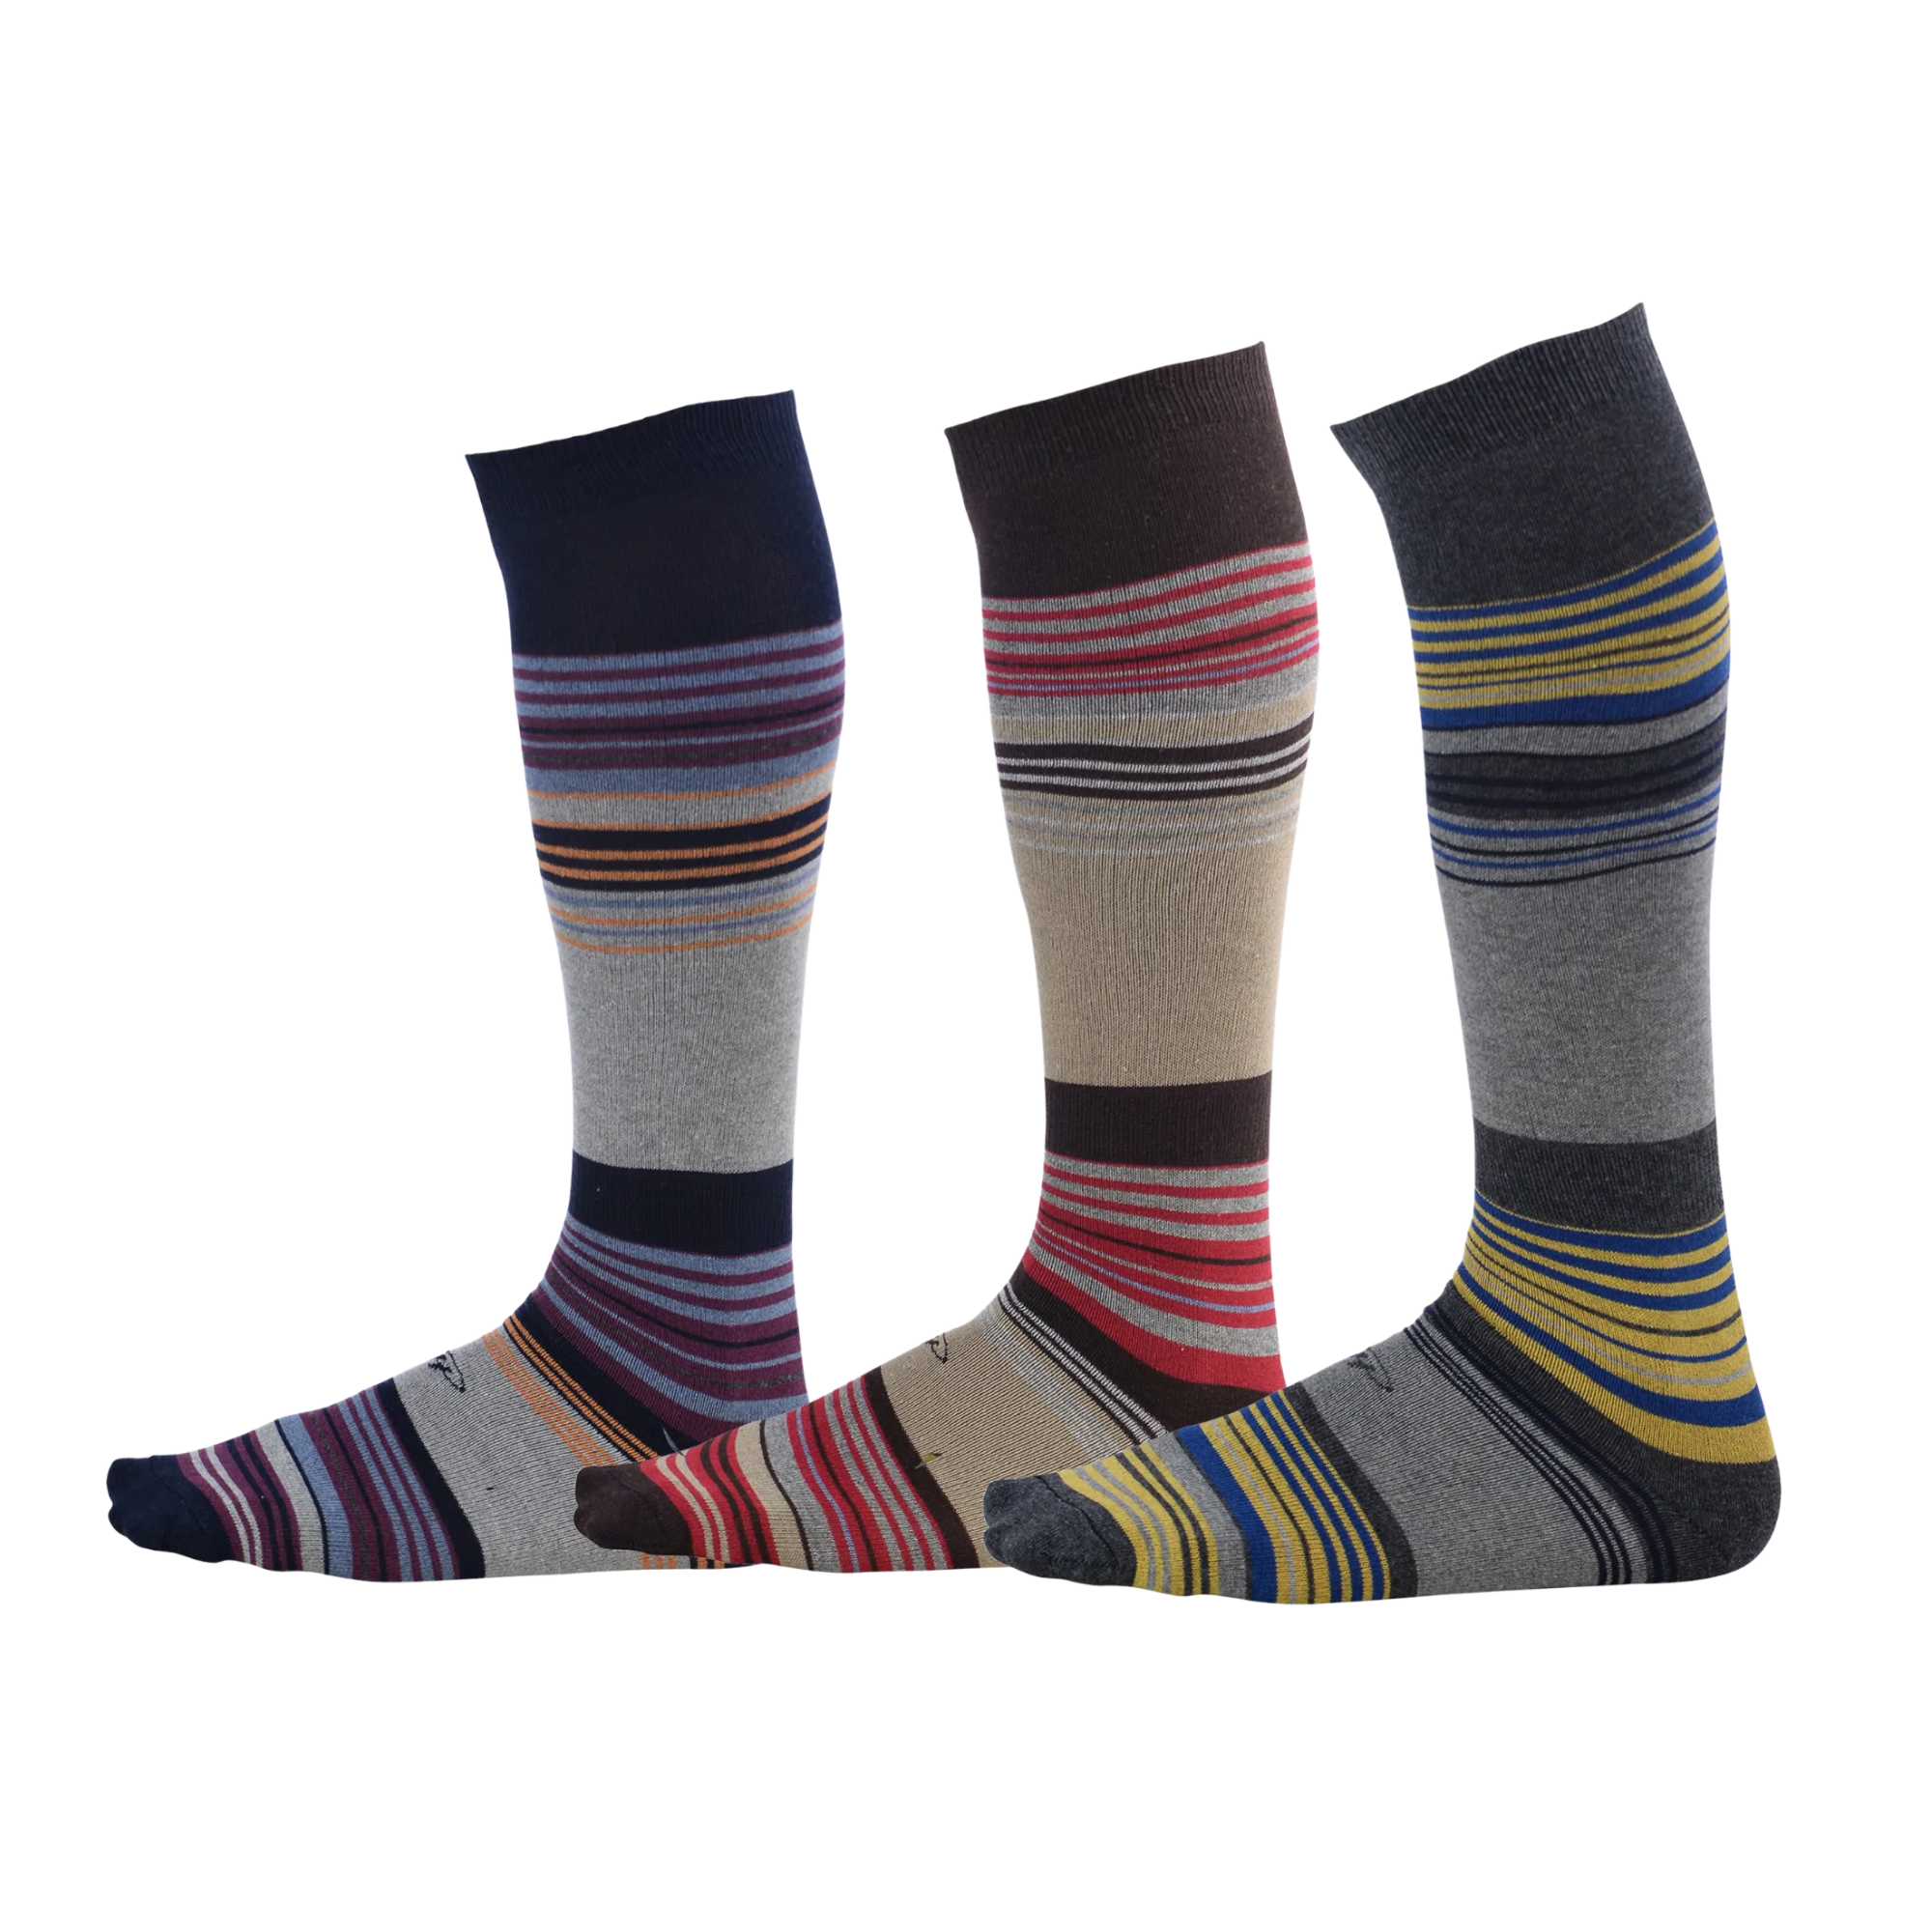 light grey dress socks with colored stripes, beige dress socks with colored stripes, grey dress socks with colored stripes